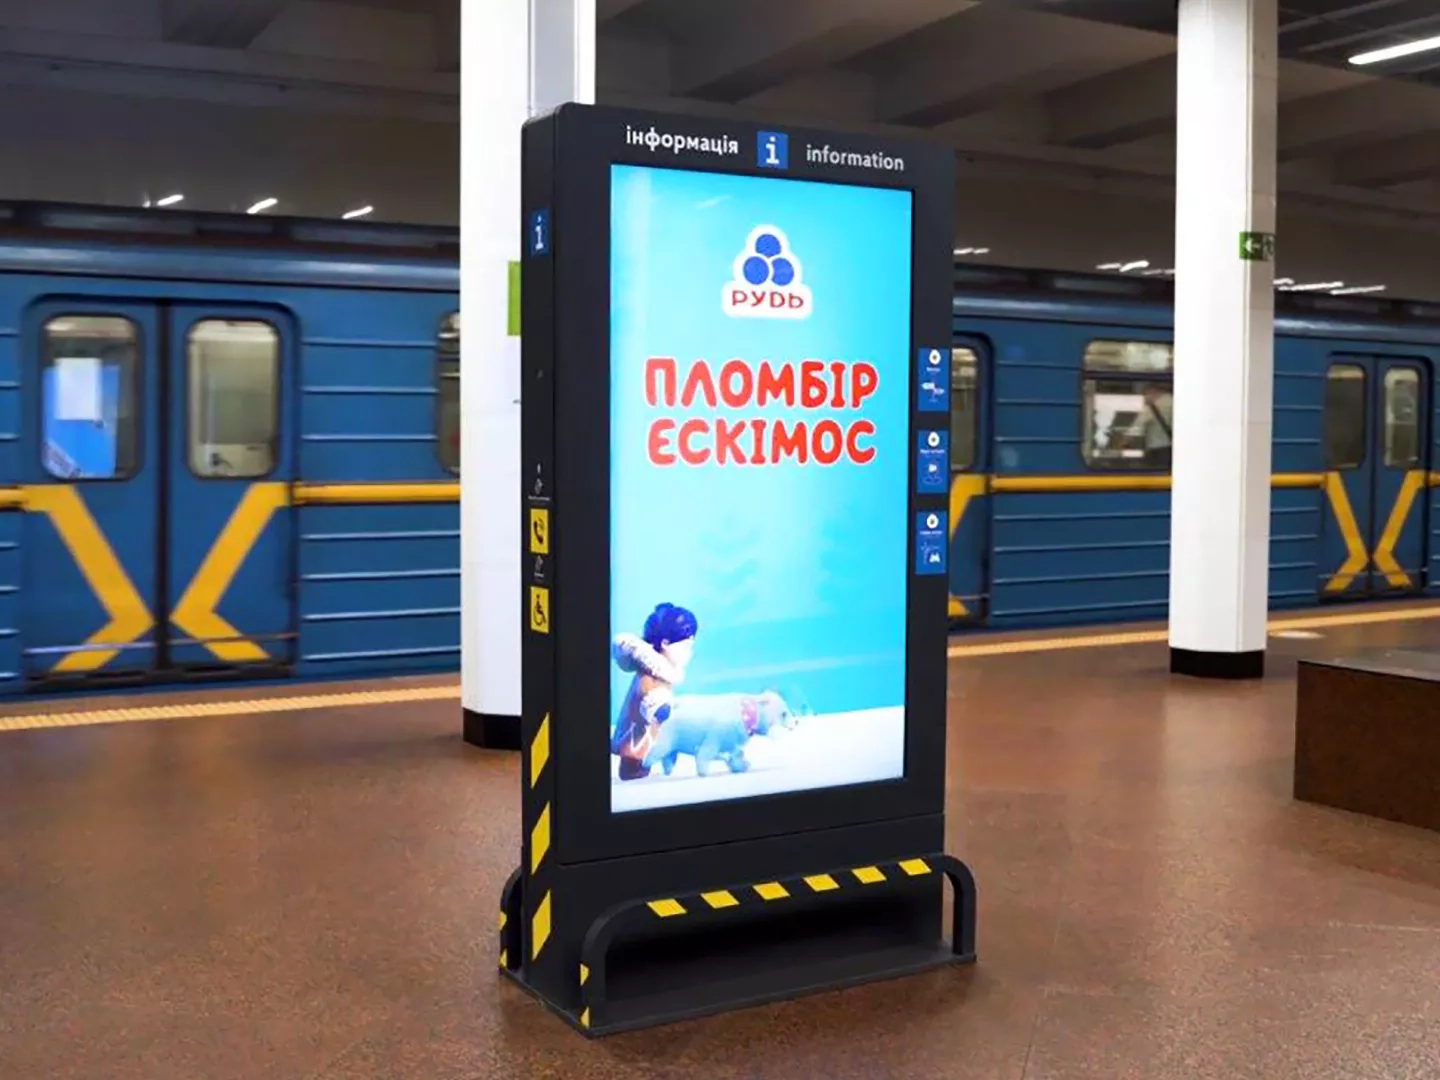 Инфостойки в метро Киева